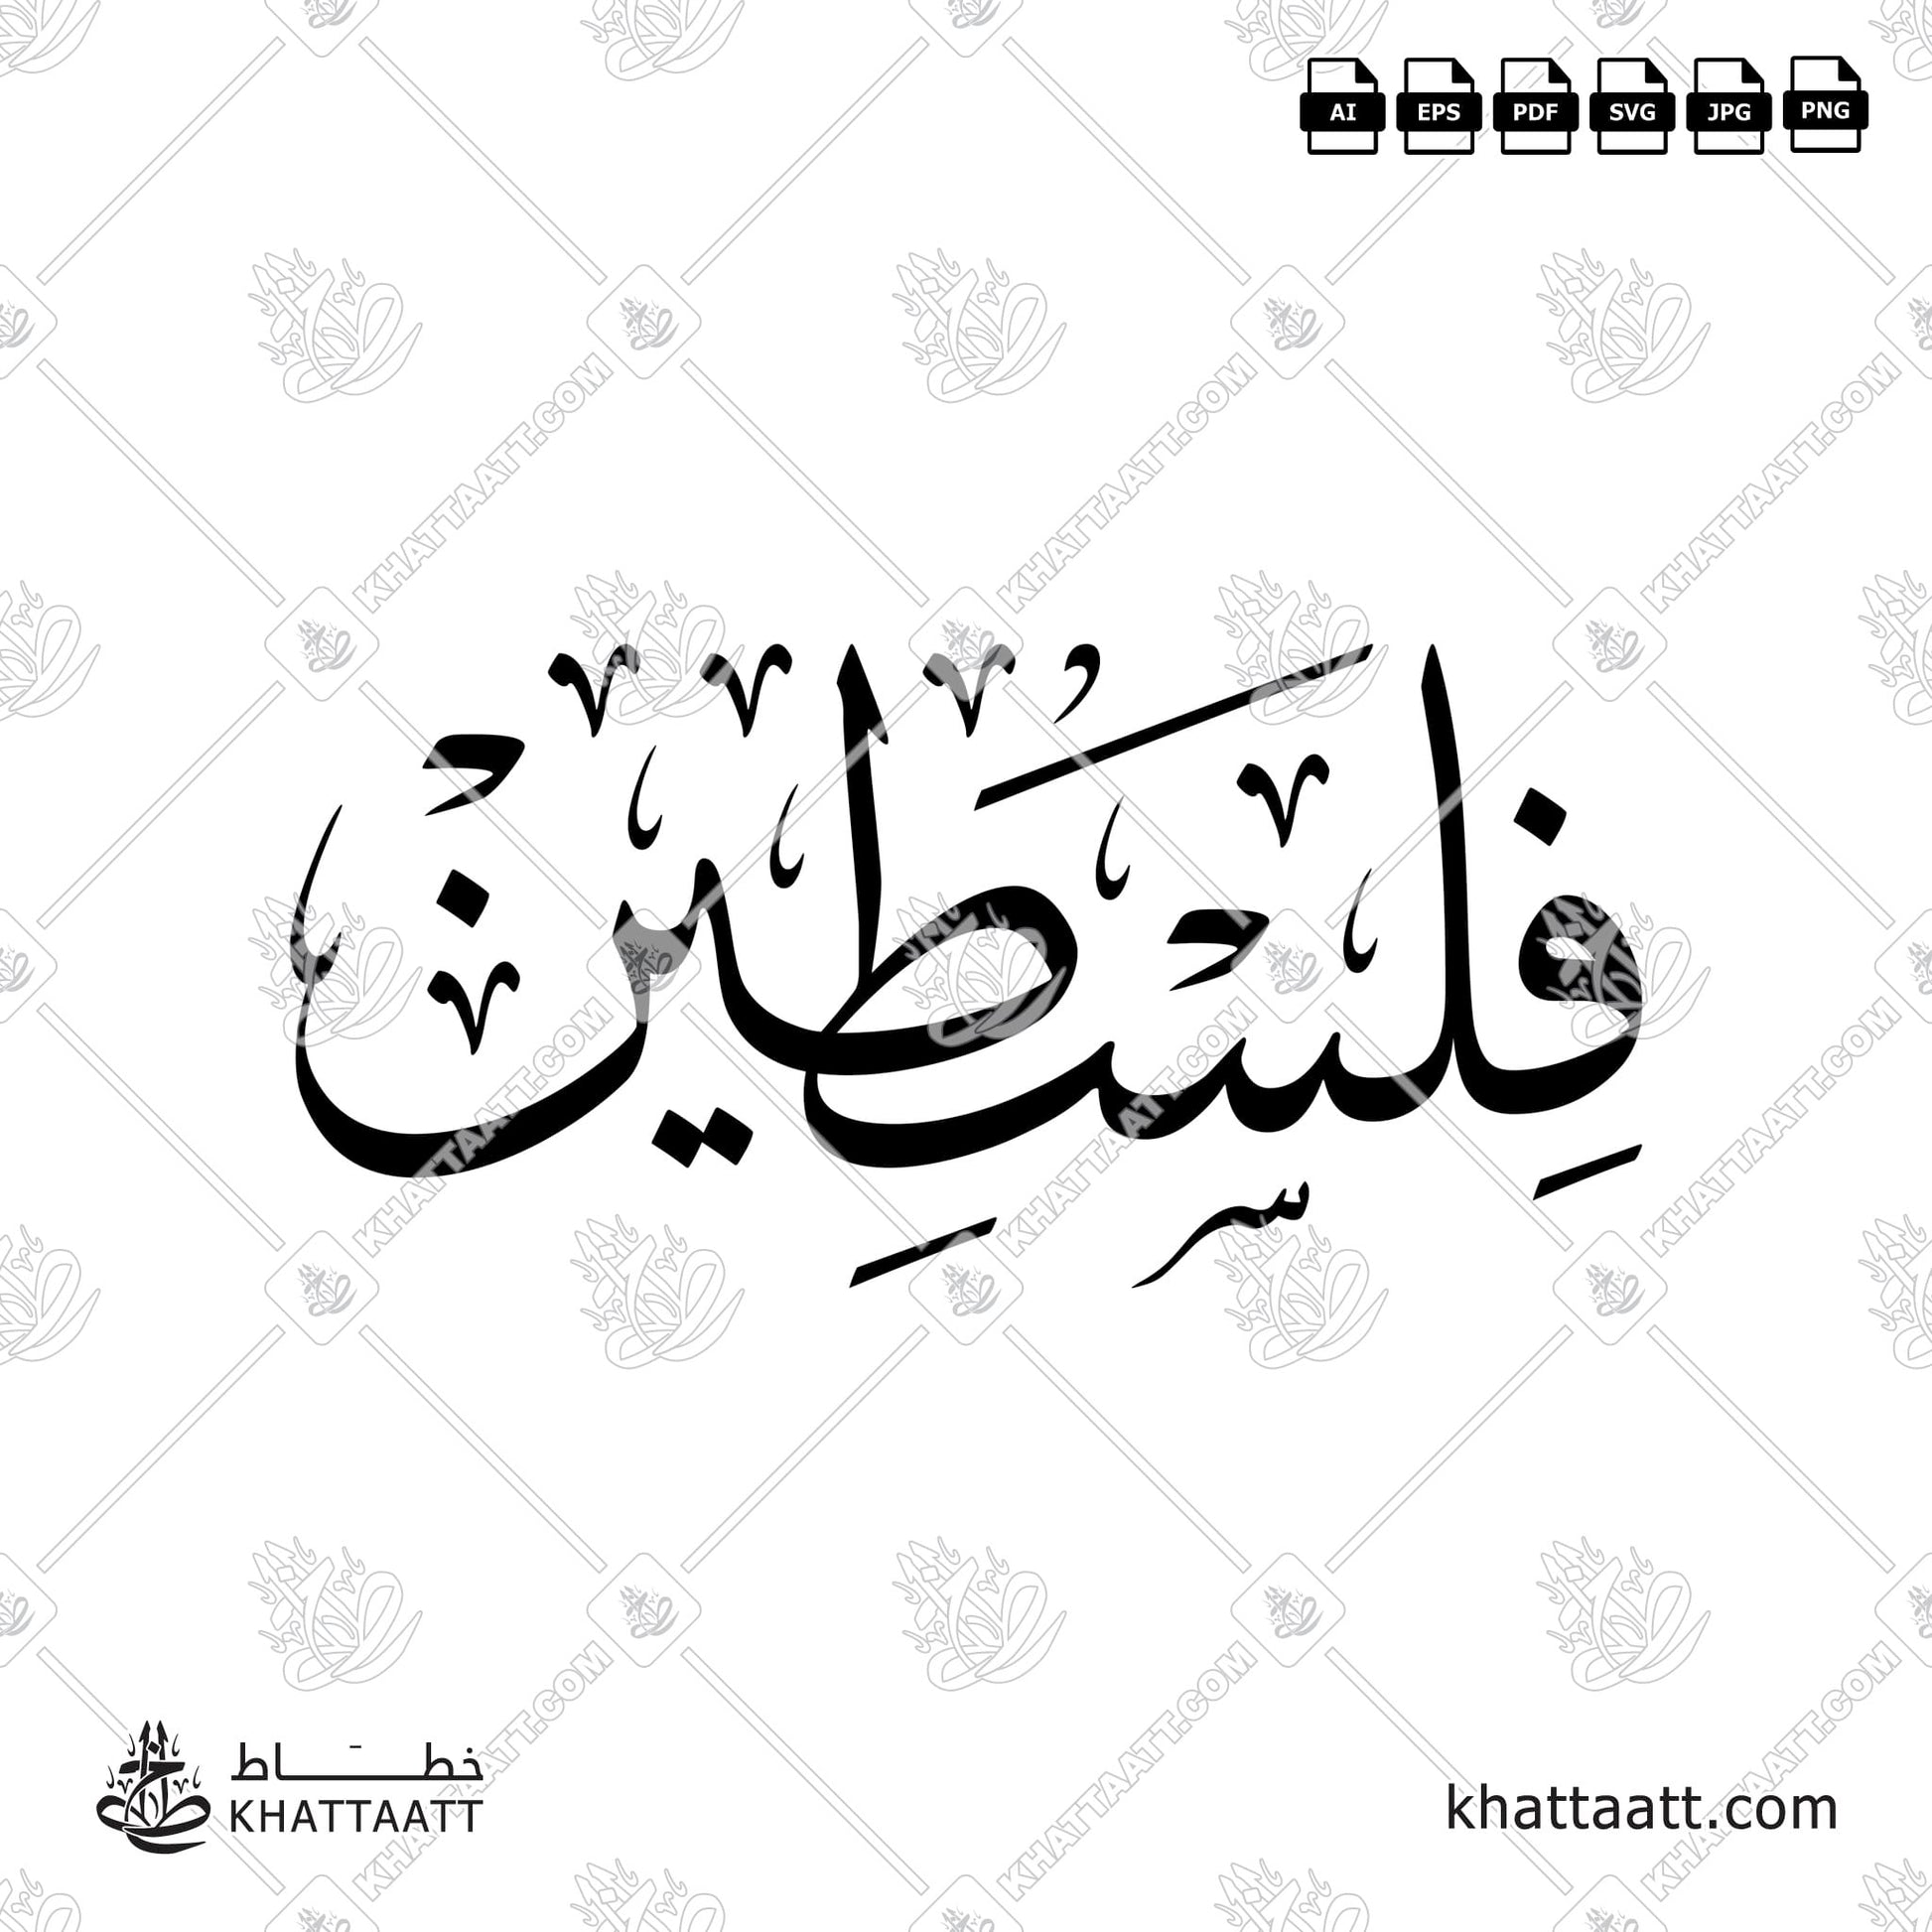 Arabic Calligraphy of Palestine فلسطين in Thuluth Script خط الثلث.